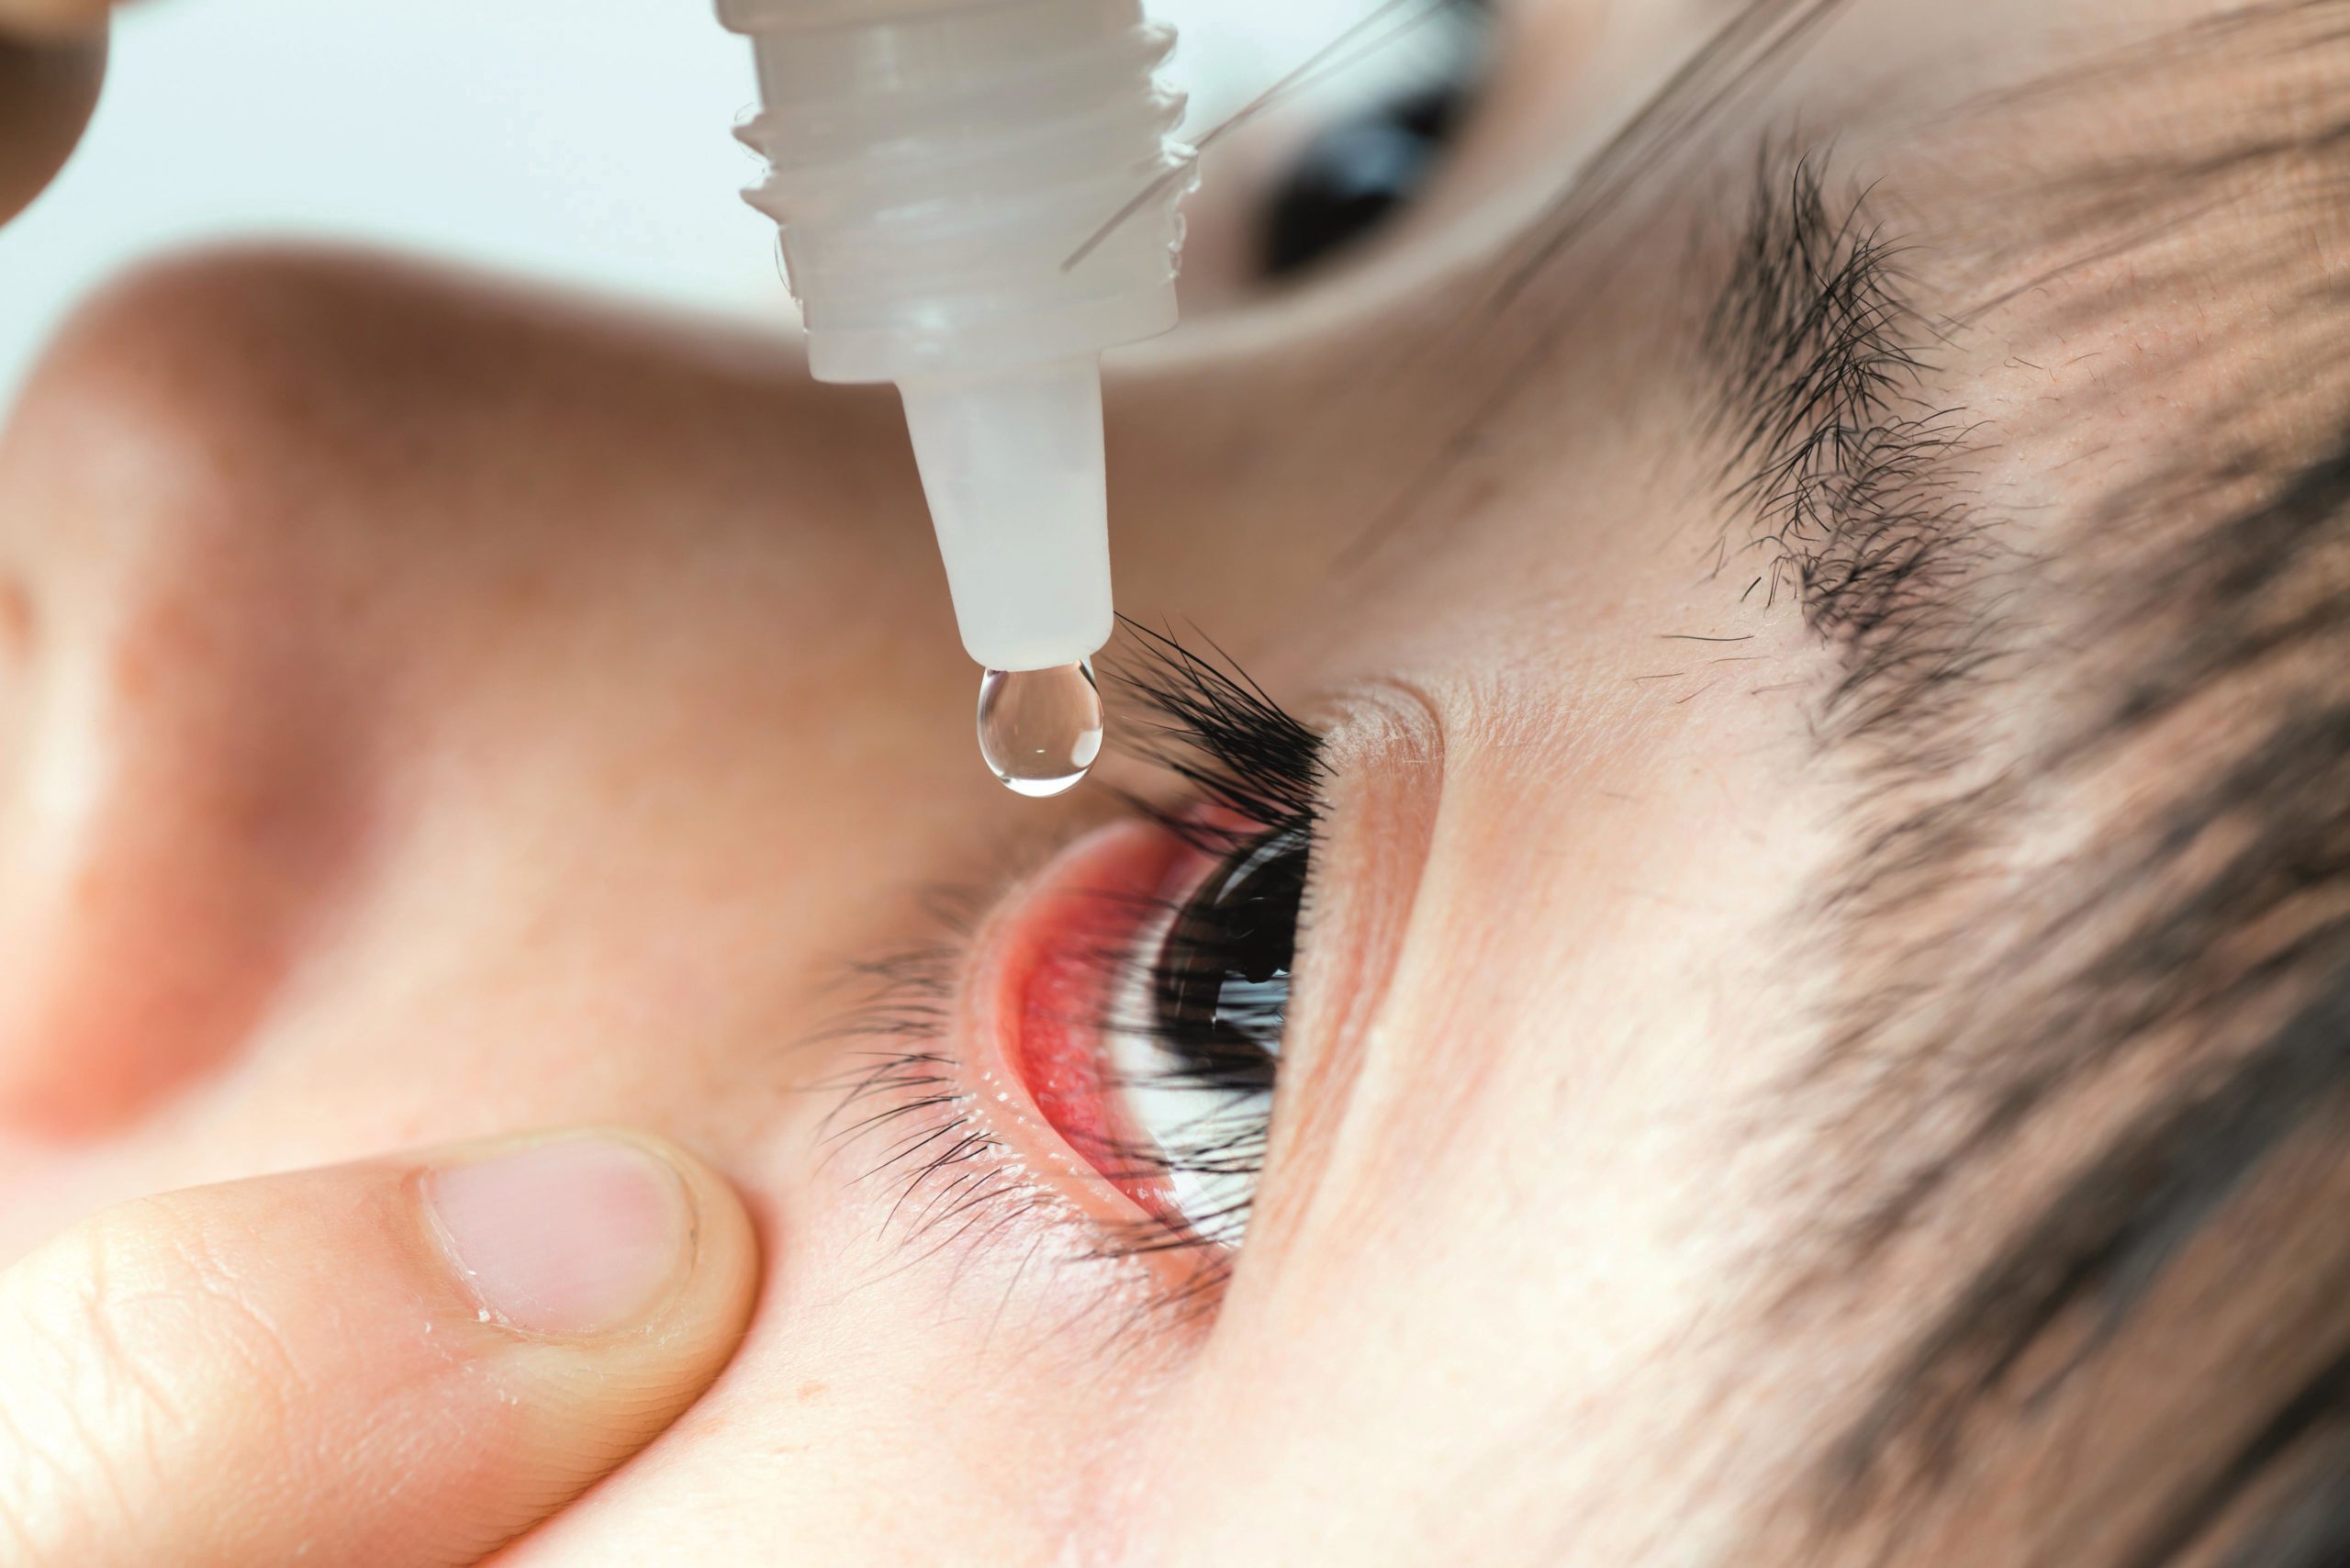 Chloramphenicol eye and ear drops